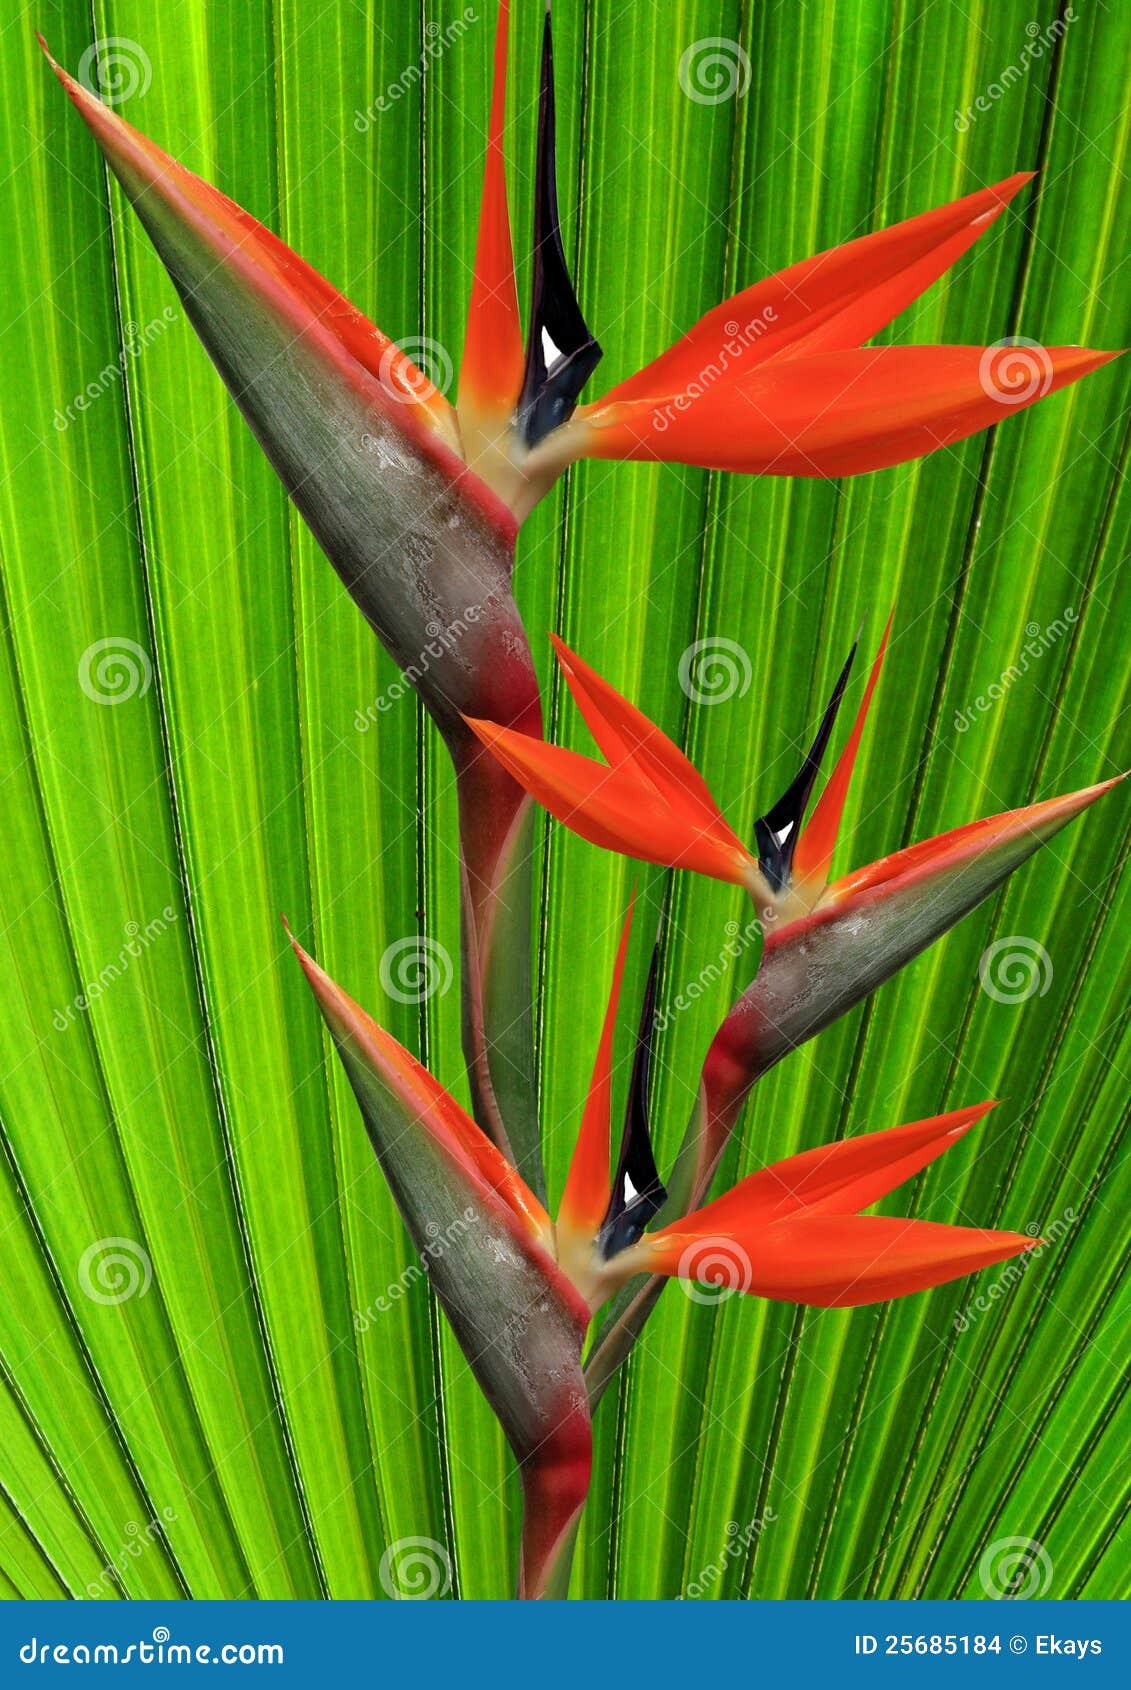 beautiful bird of paradise flower on a green fan palm background.